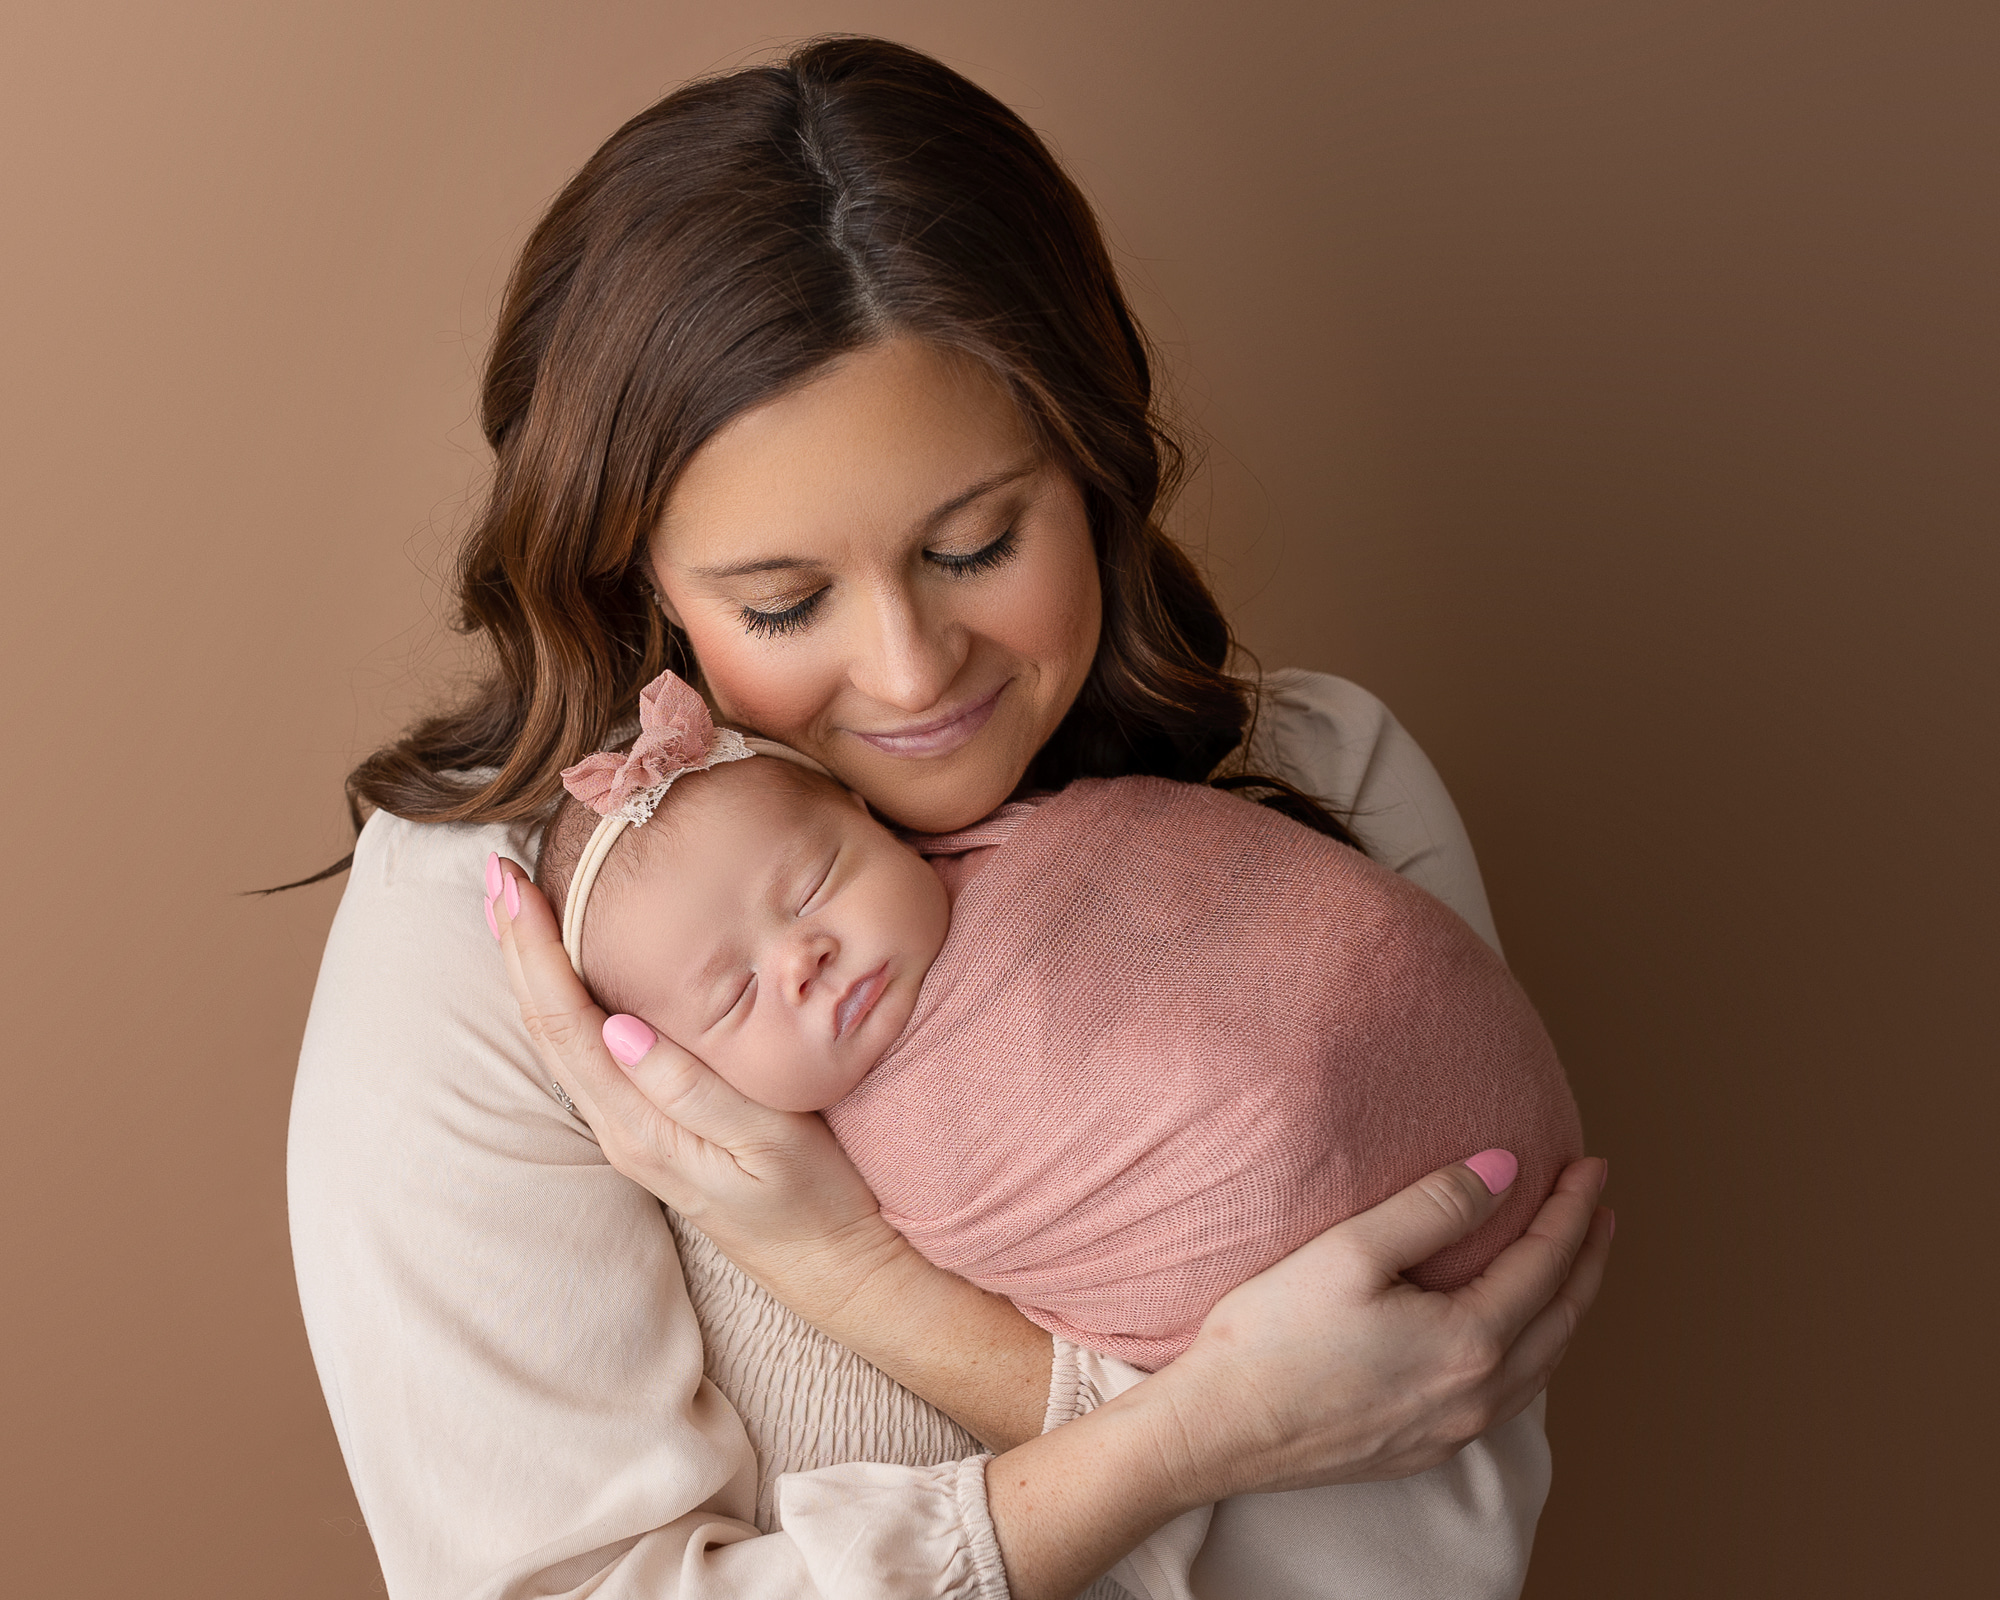 postpartum depression and baby blues